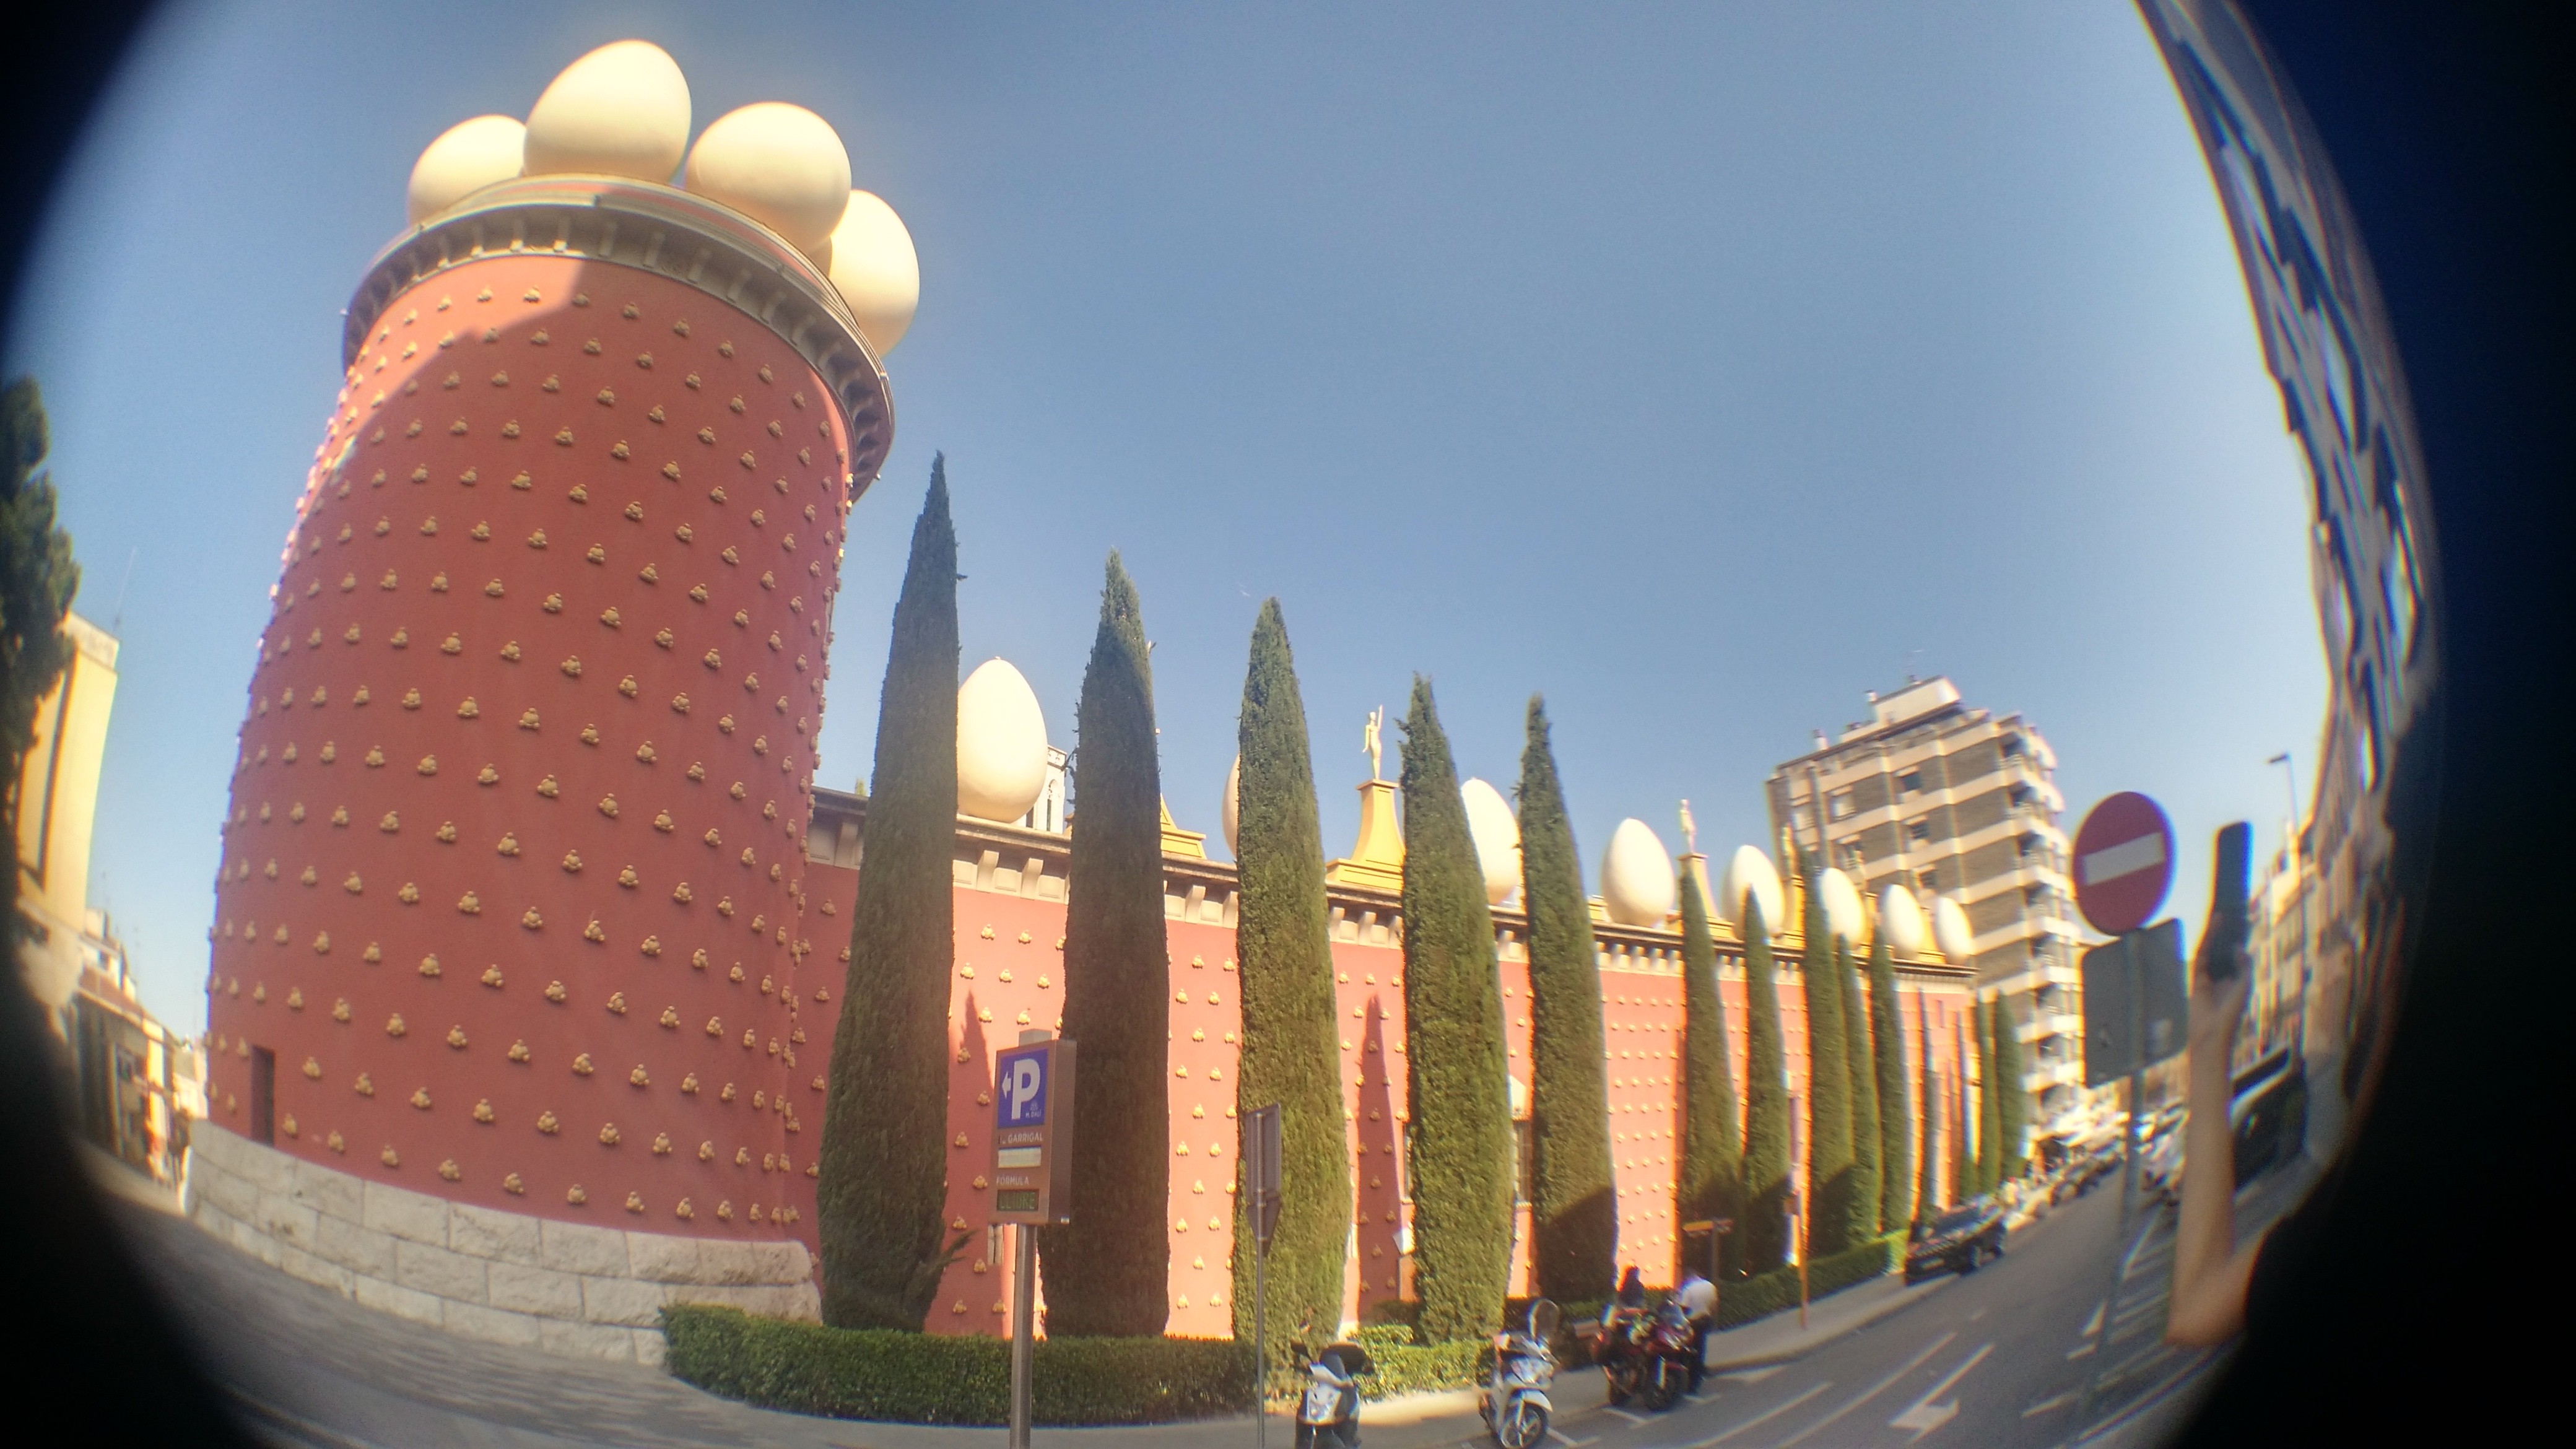 Fachada do Teatro-Museu Dalí na cidade de Figueres, na Espanha (Foto: Giuliana de Toledo)